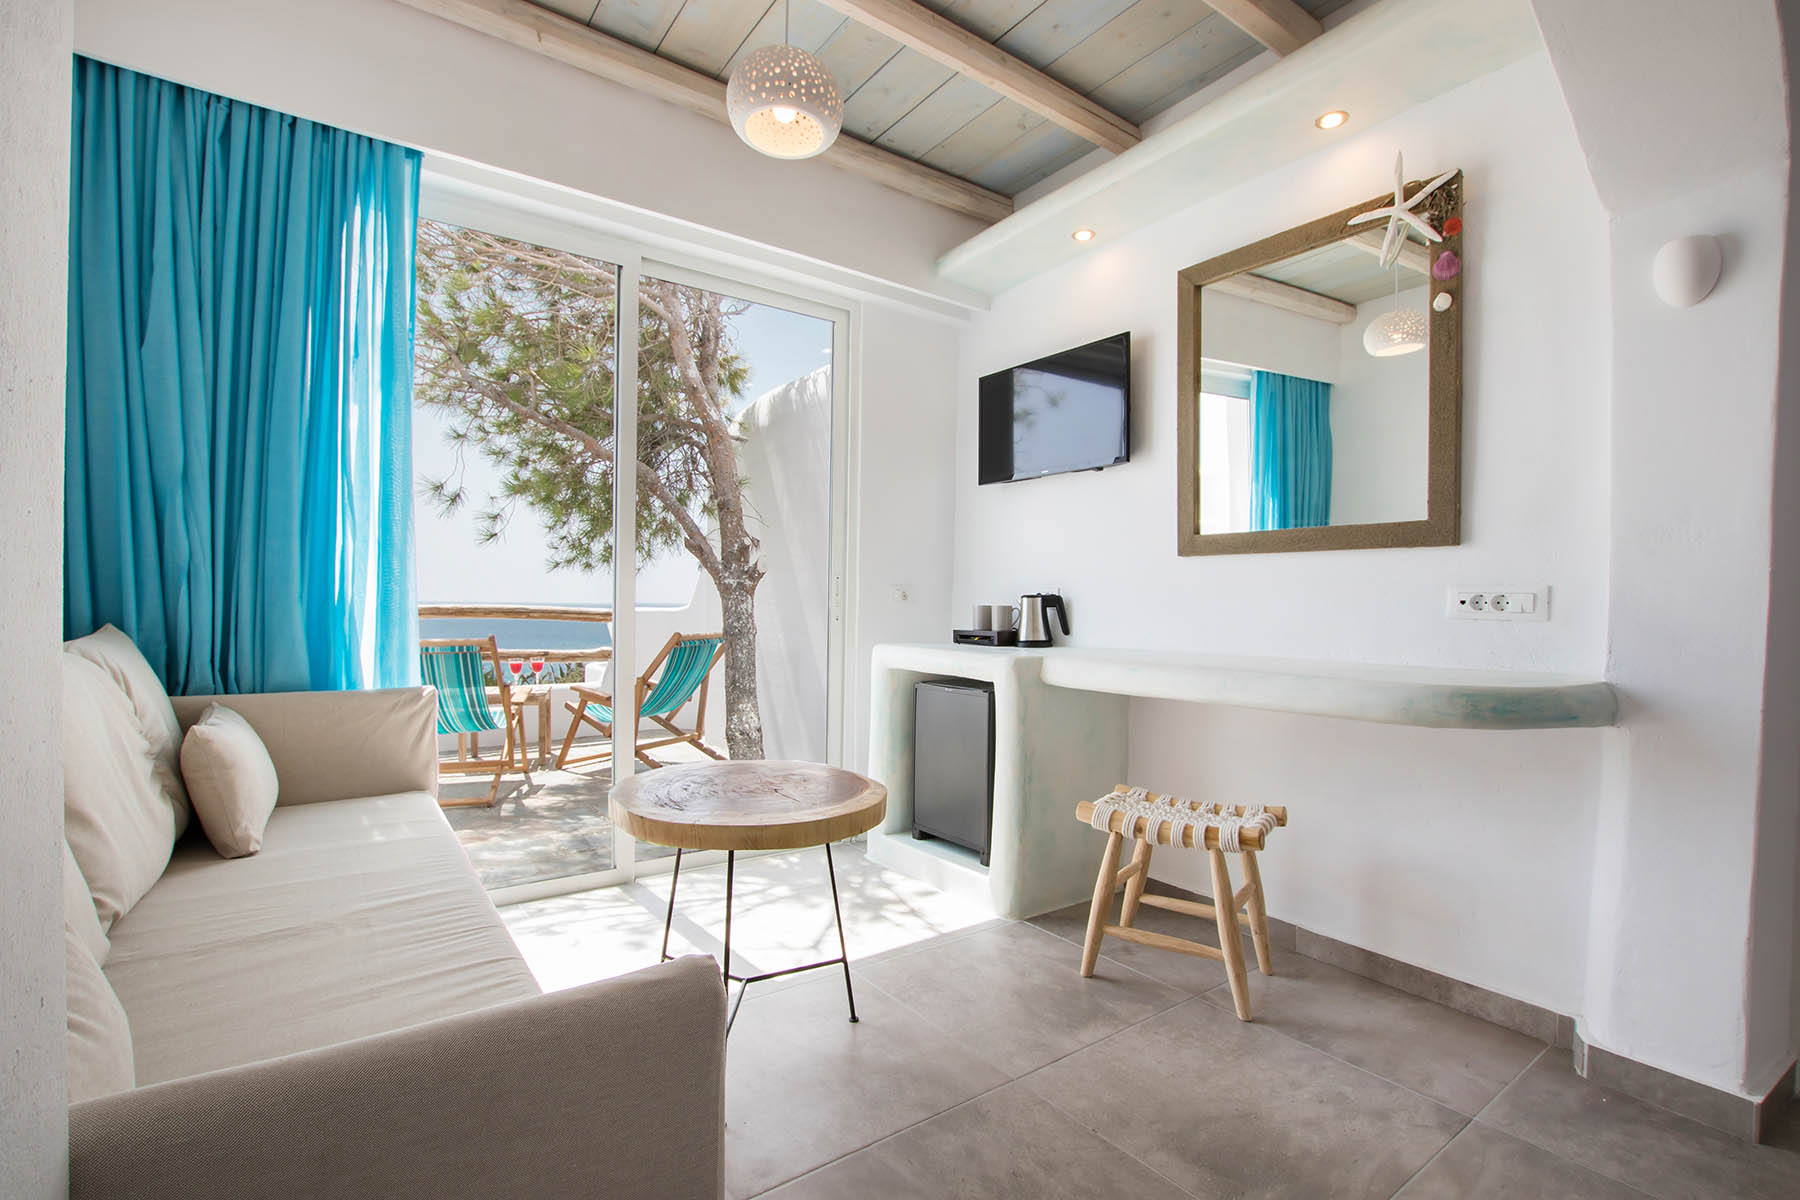 accommodation in karpathos - Poseidon Blue Gastronomy Hotel